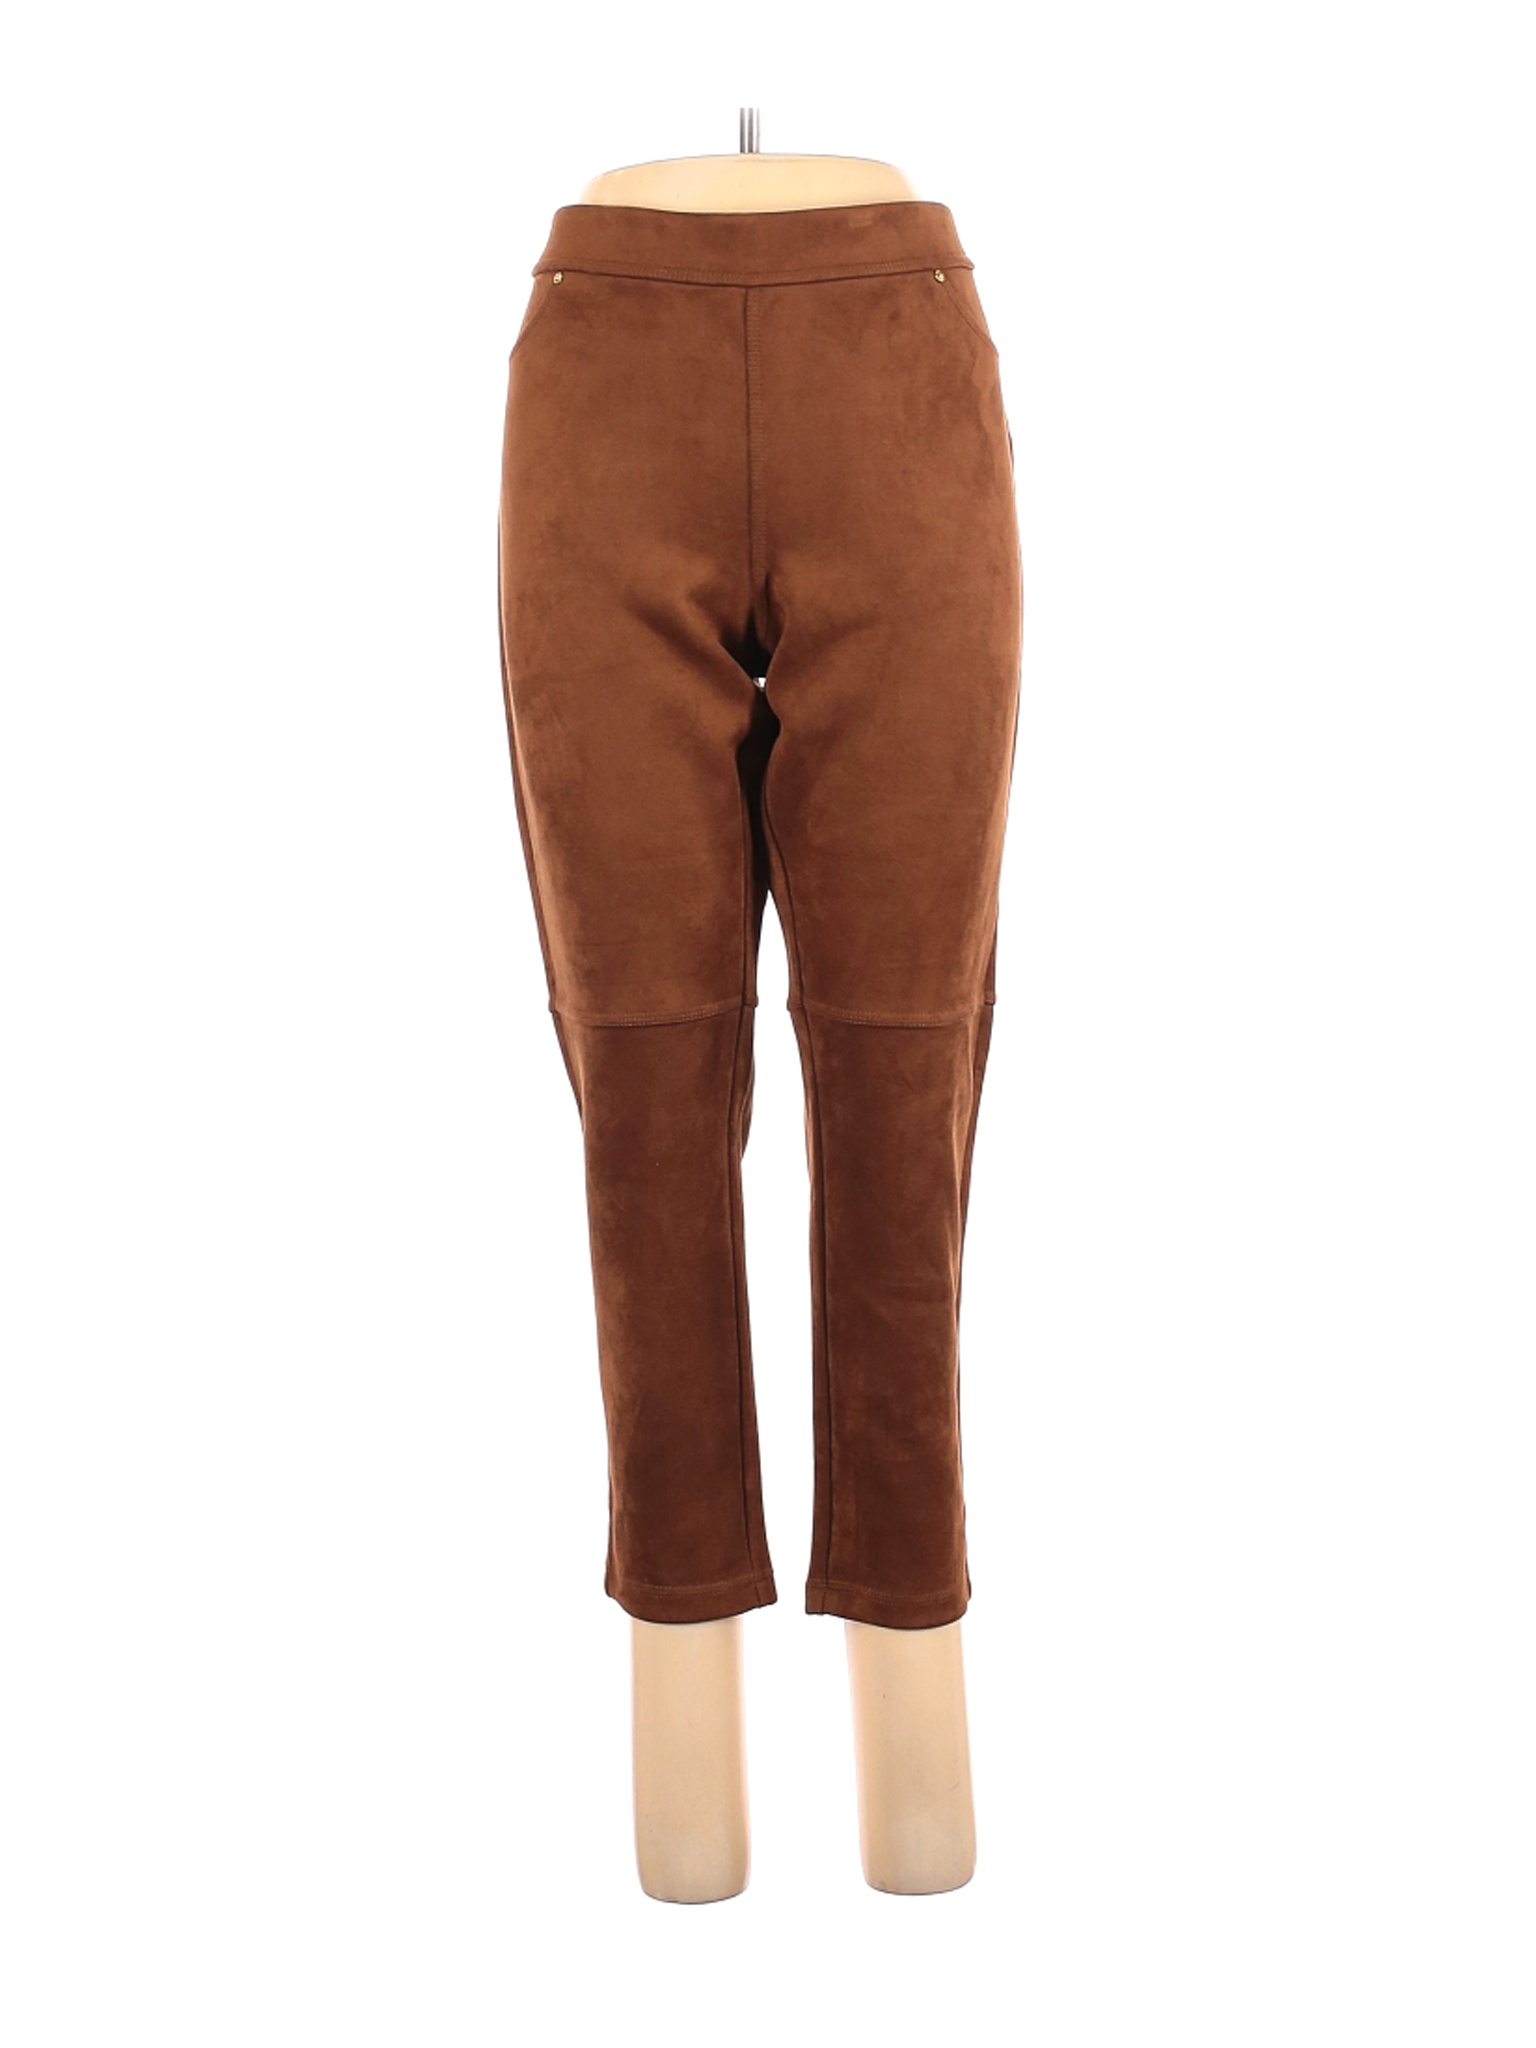 Marc New York Women Brown Velour Pants L Petites | eBay